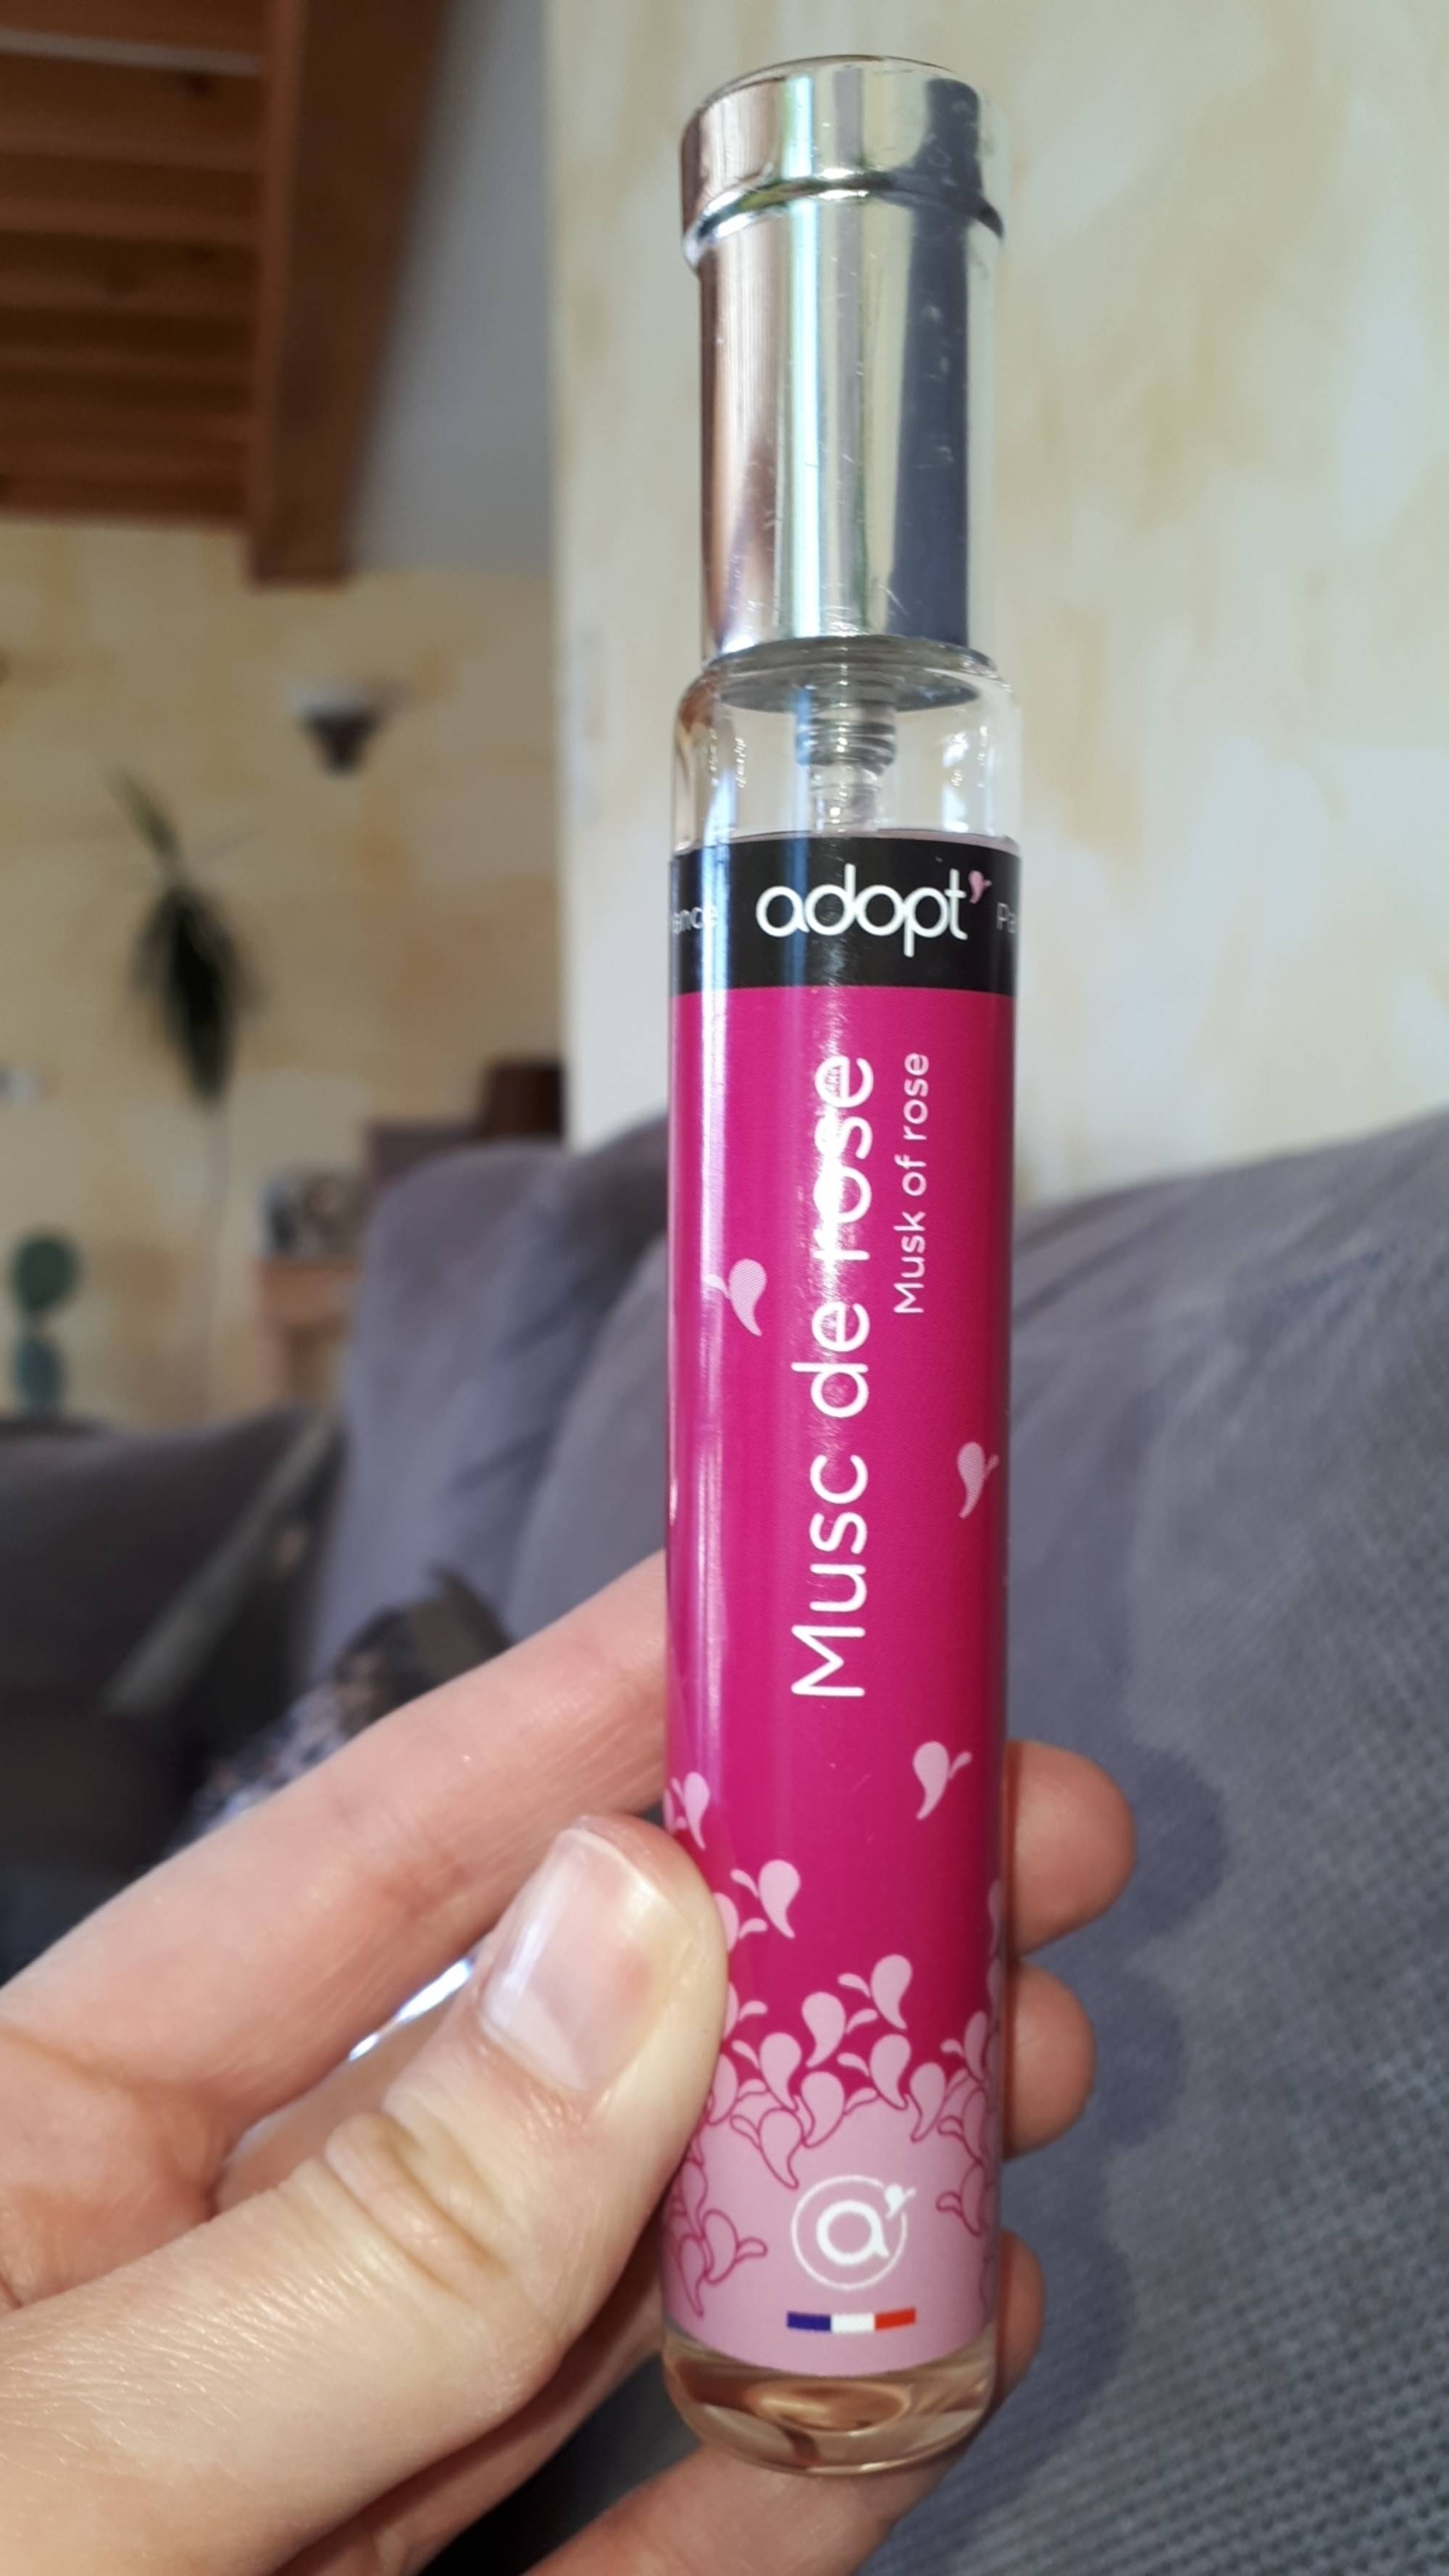 ADOPT' - Musc de rose - Eau de parfum